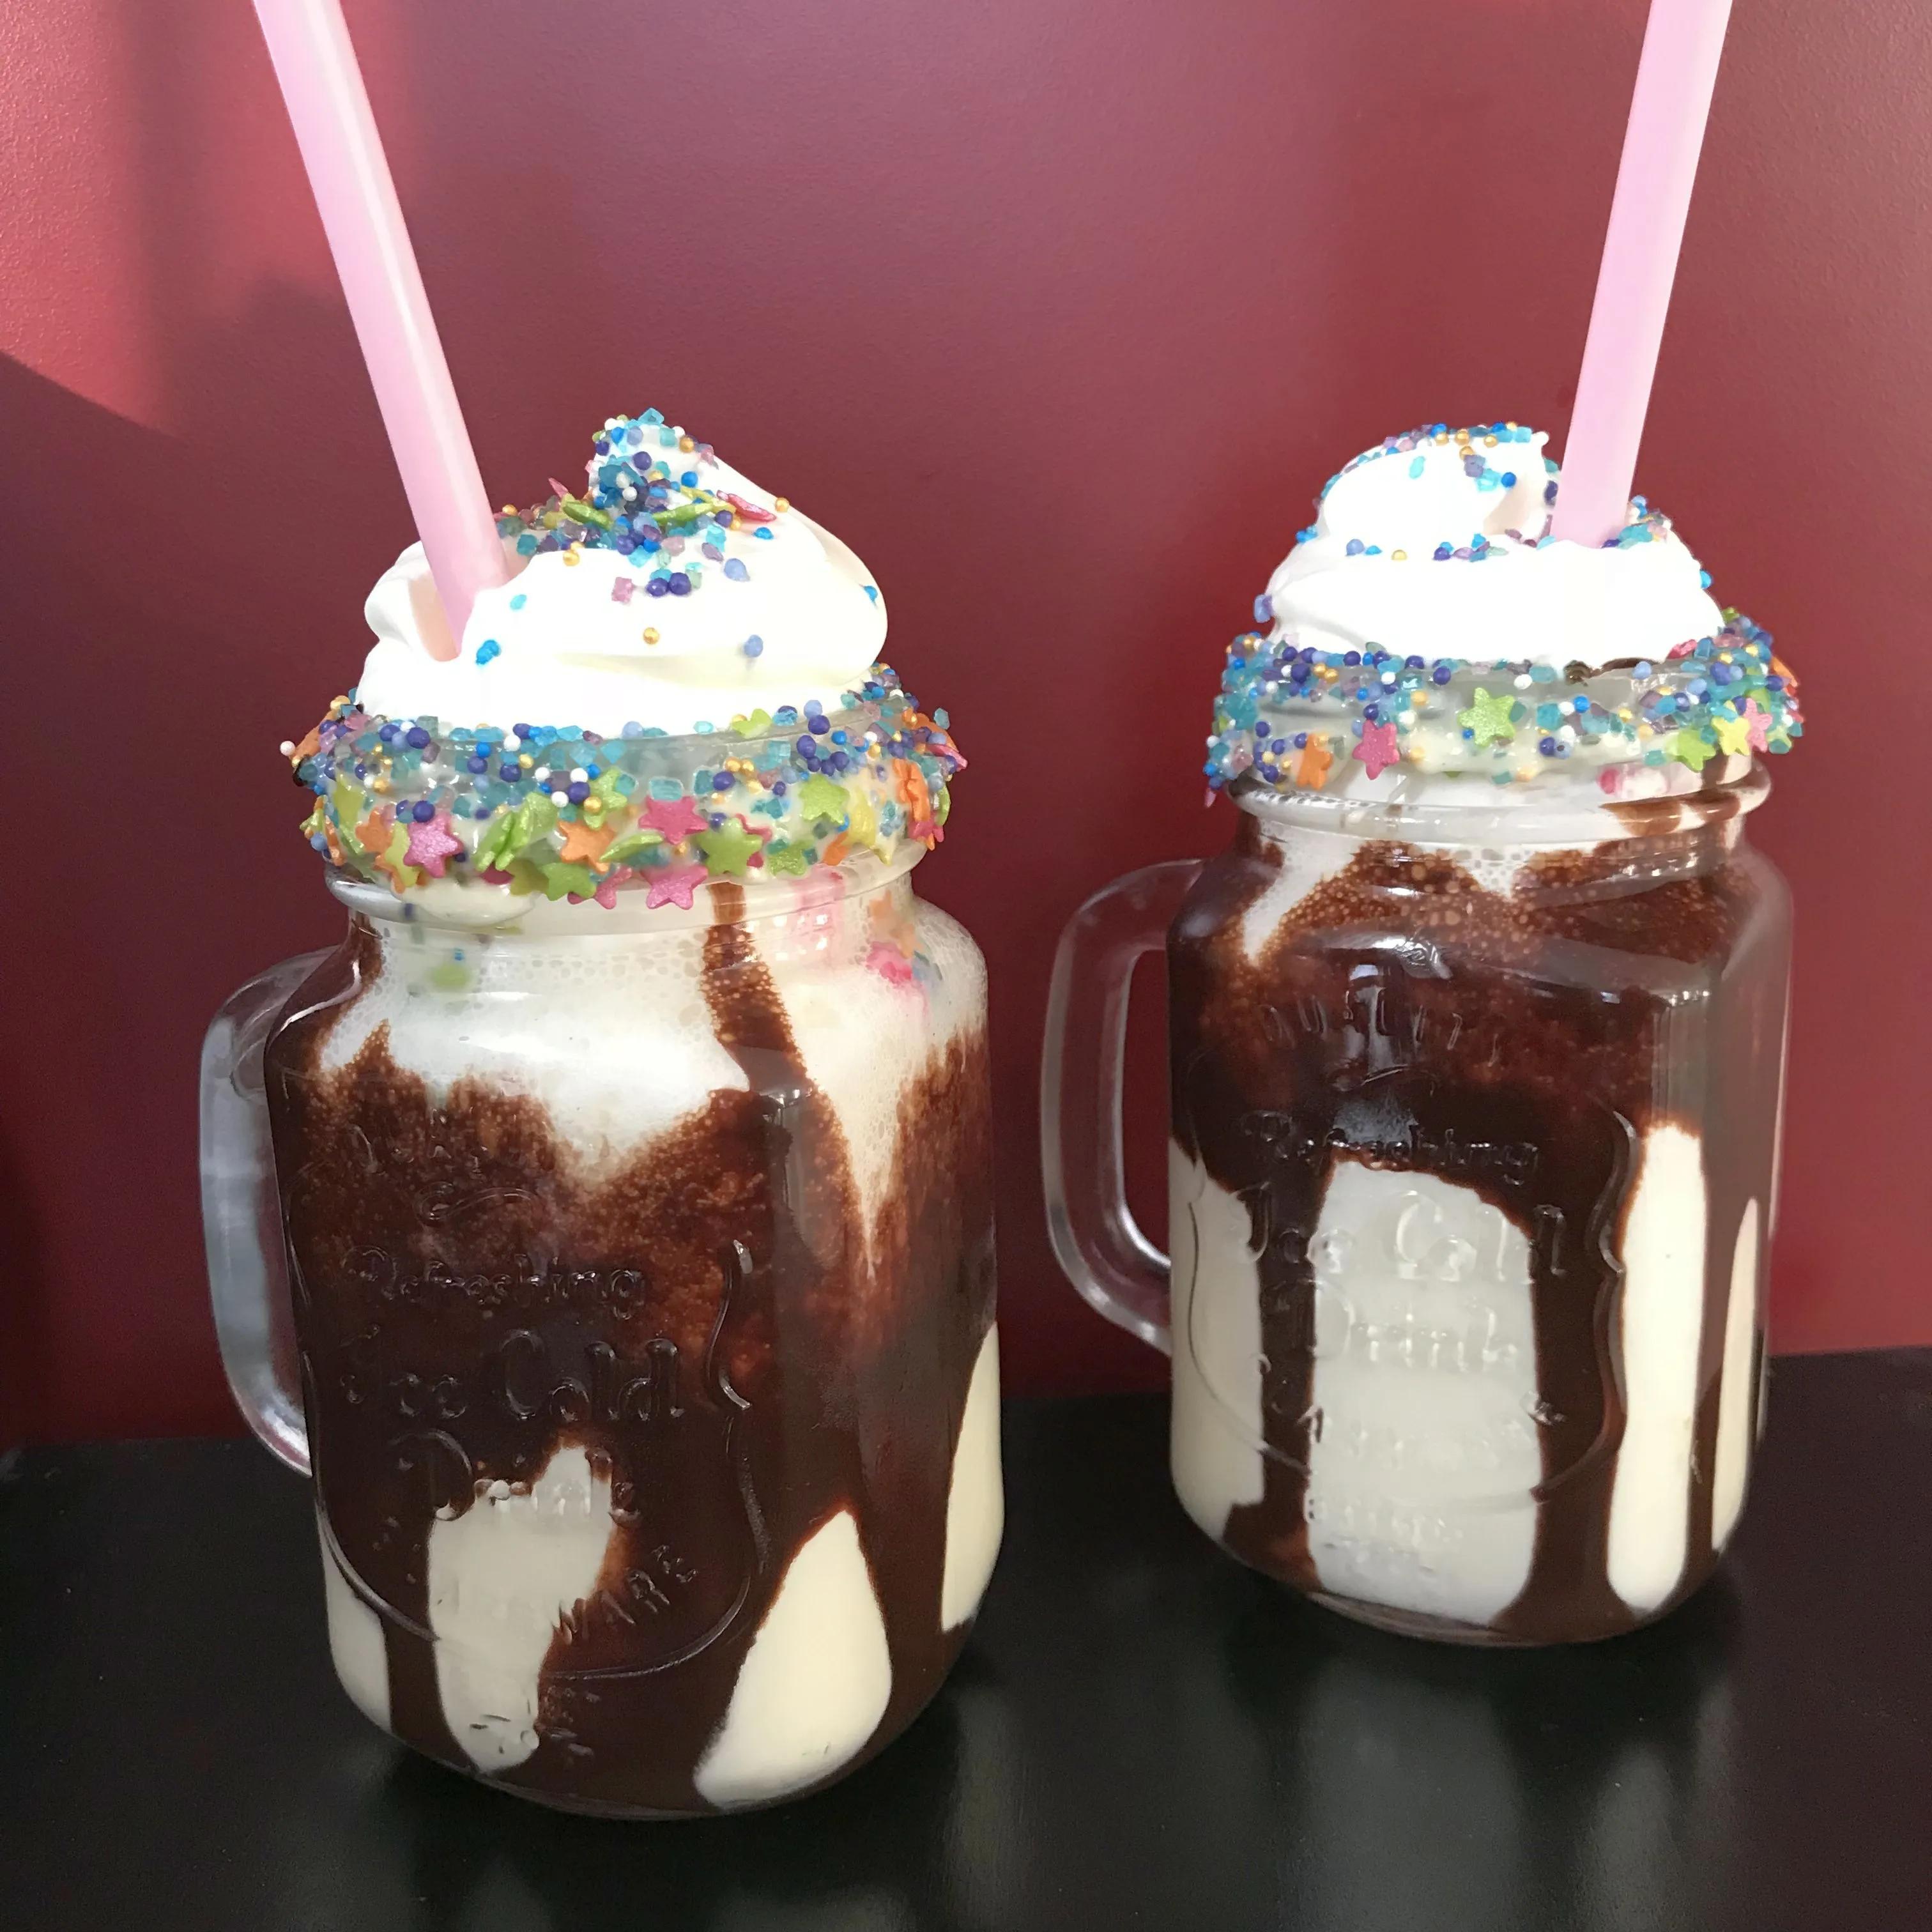 Vanilla and chocolate milkshake – Fabulous little nibbles